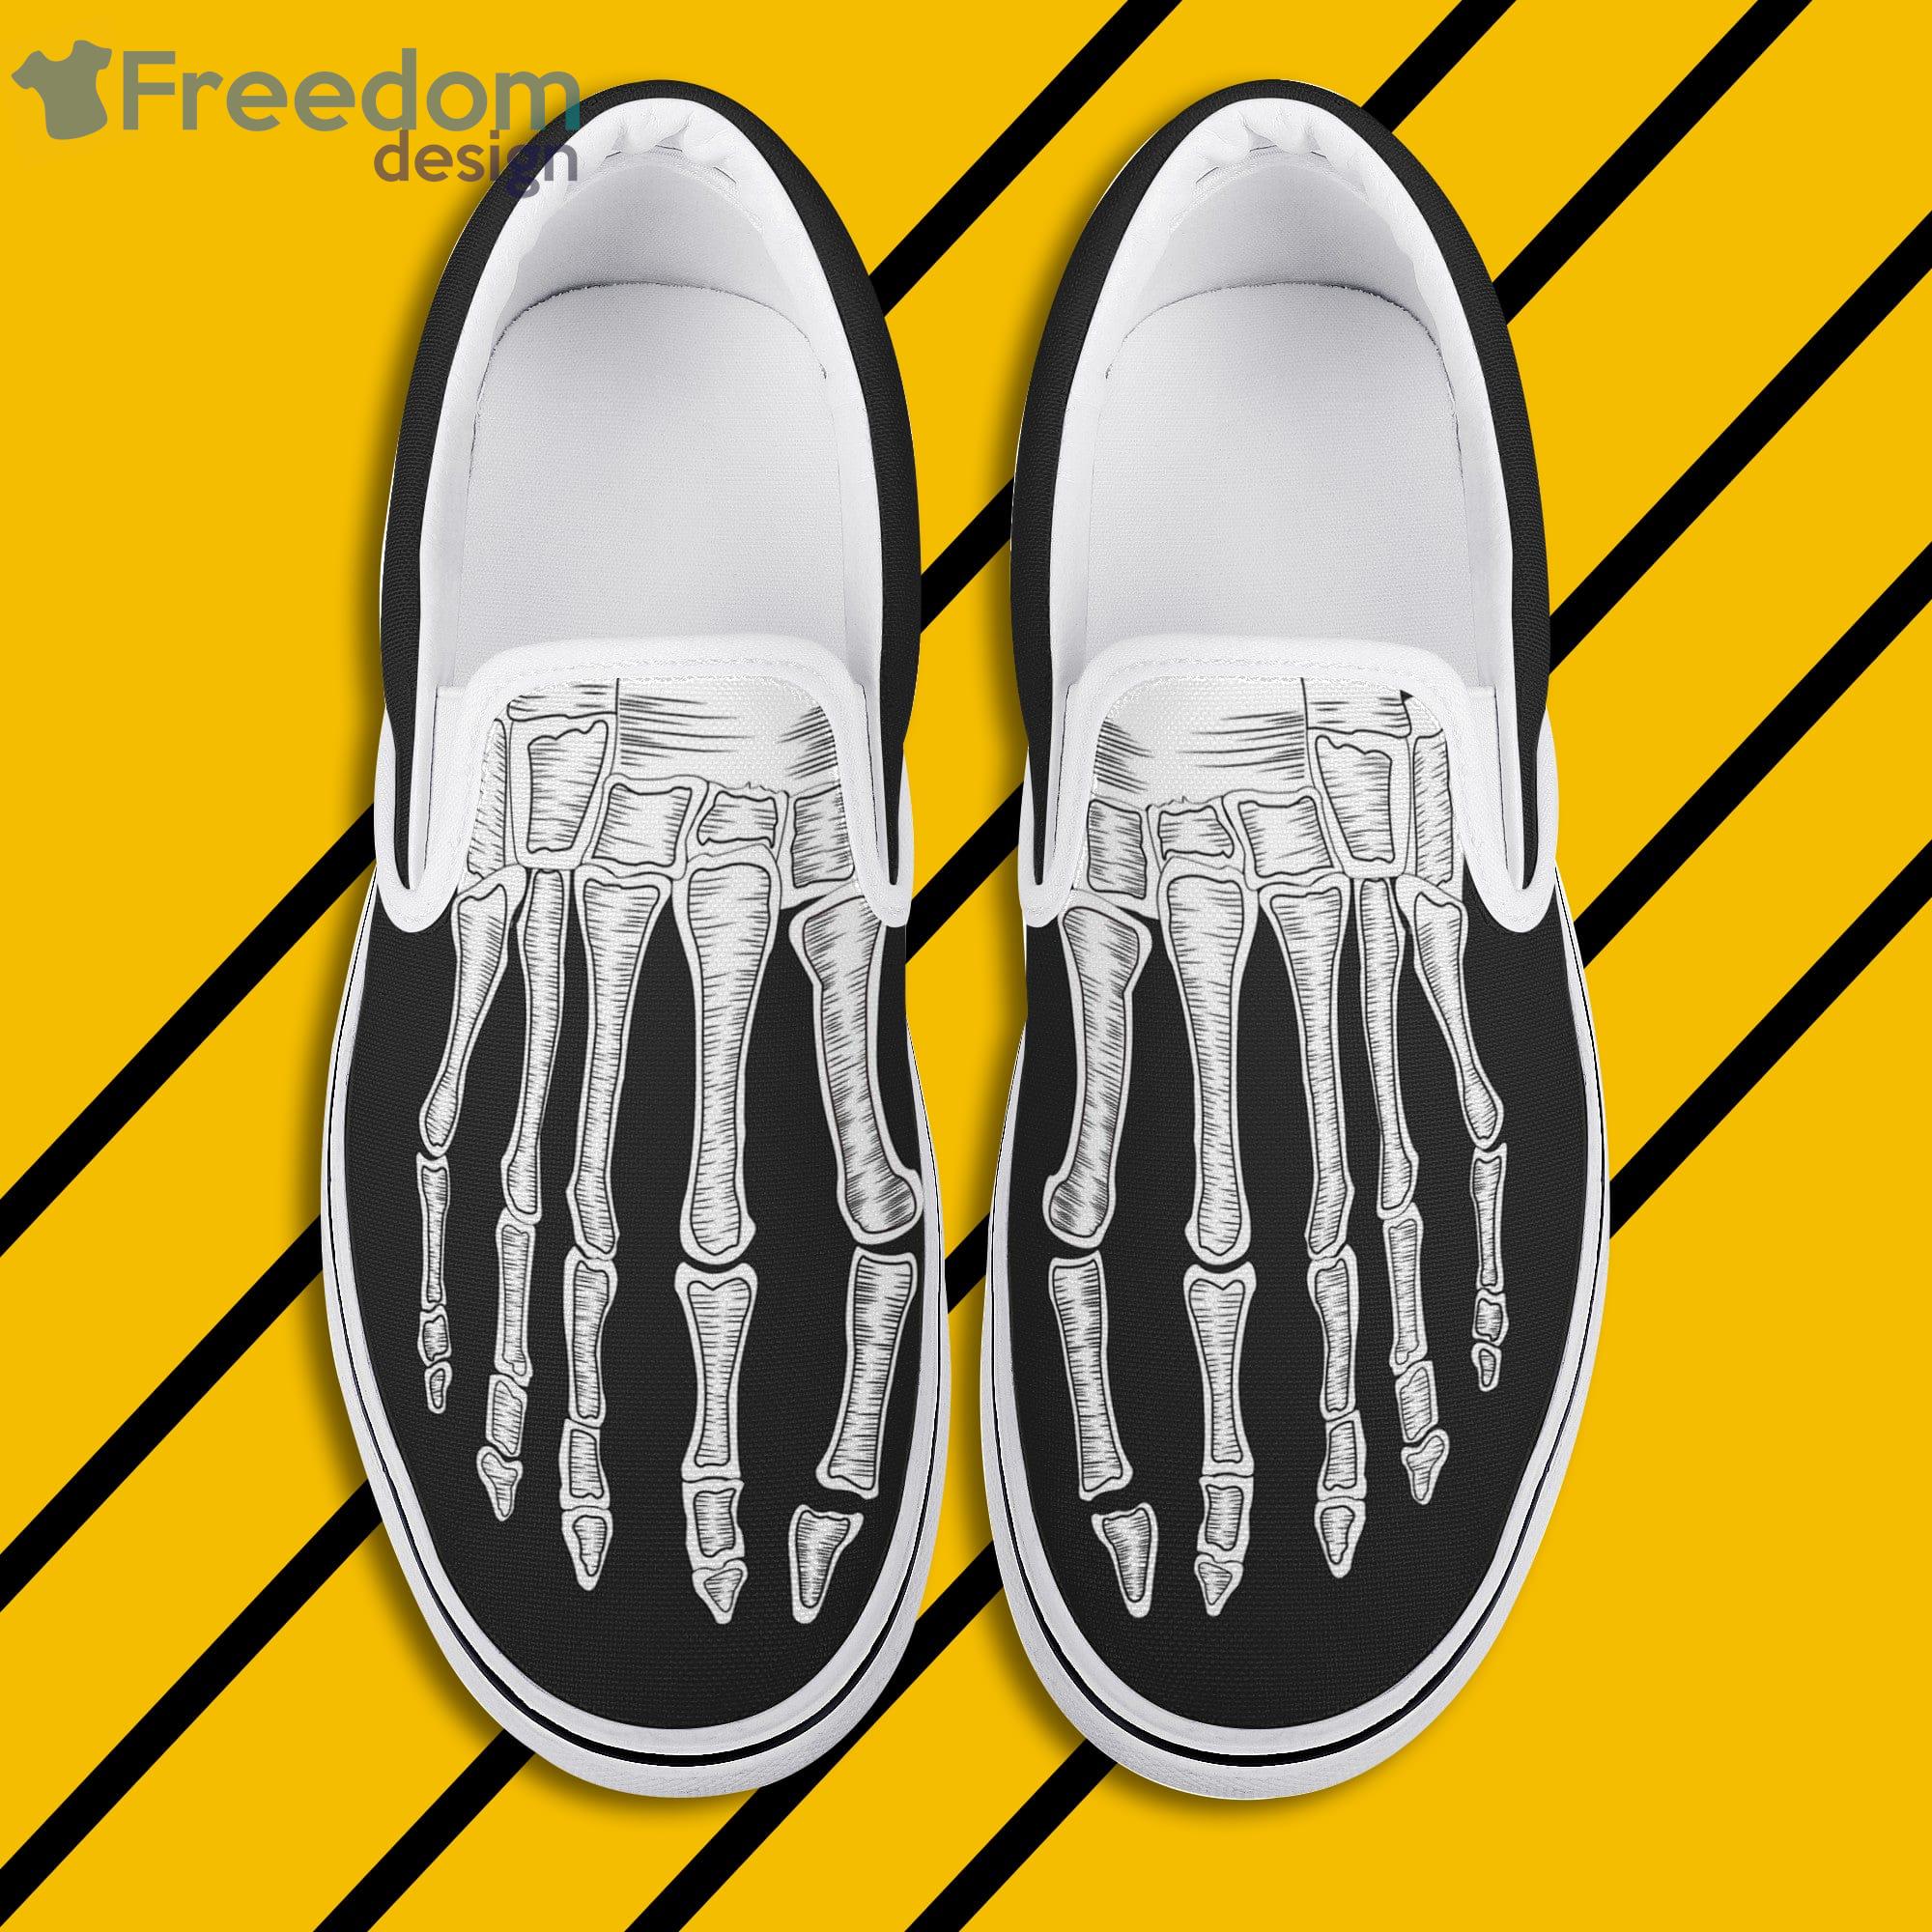 Skeleton Feet Slip On Shoes For Men And Women Product Photo 1